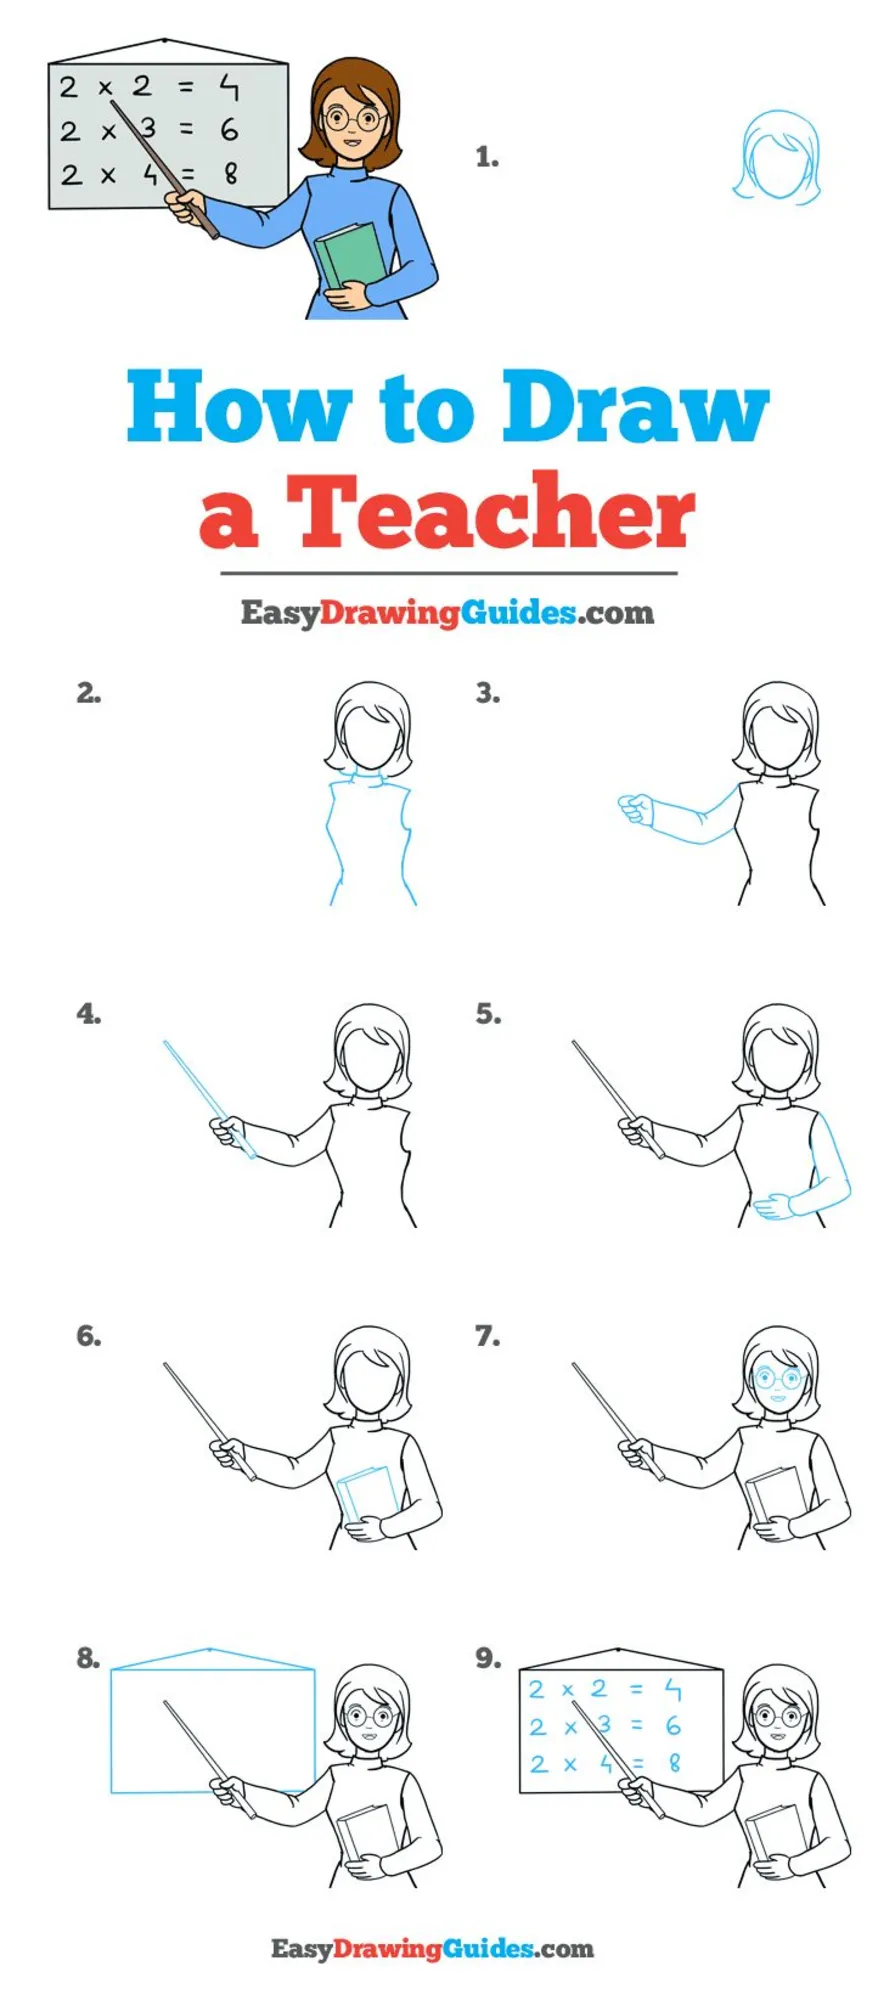 How to draw a teacher